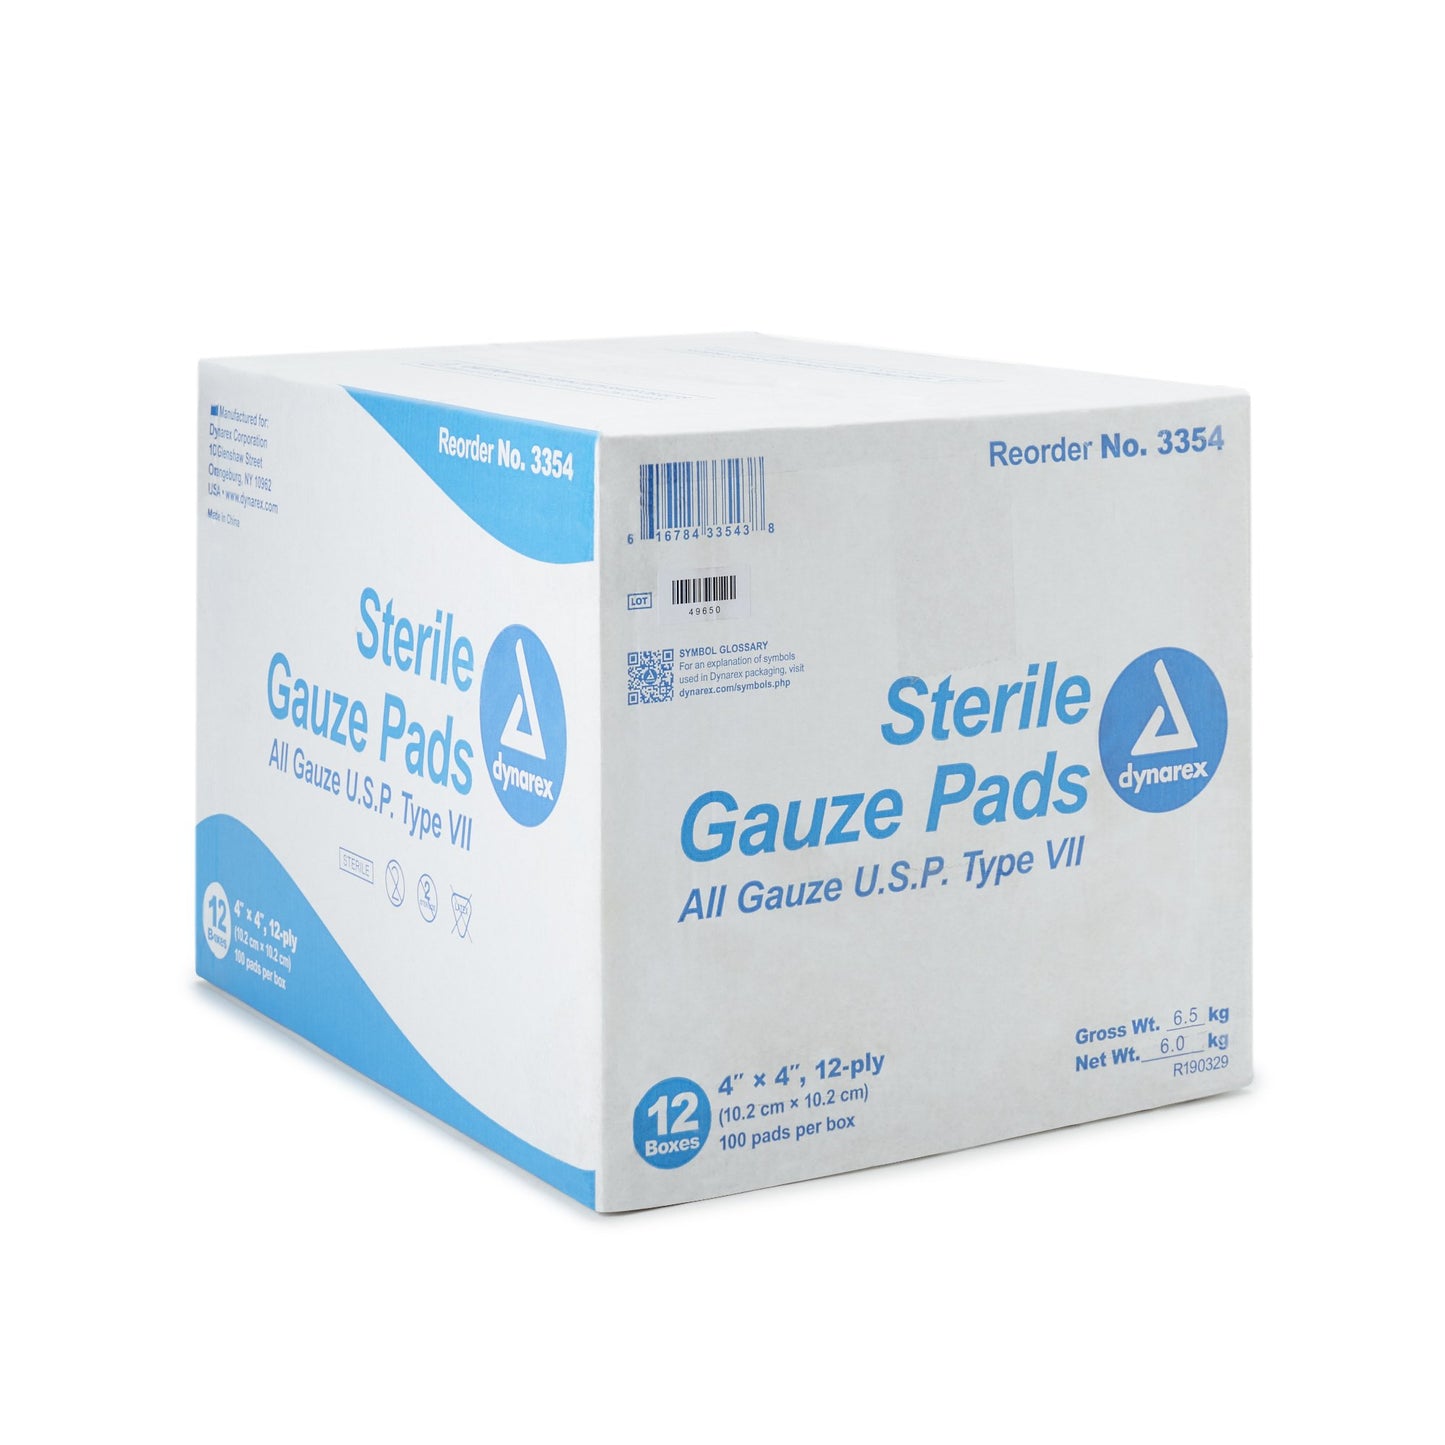 Dynarex® Sterile Gauze Pad, 4 x 4 Inch Pad, 1200 ct